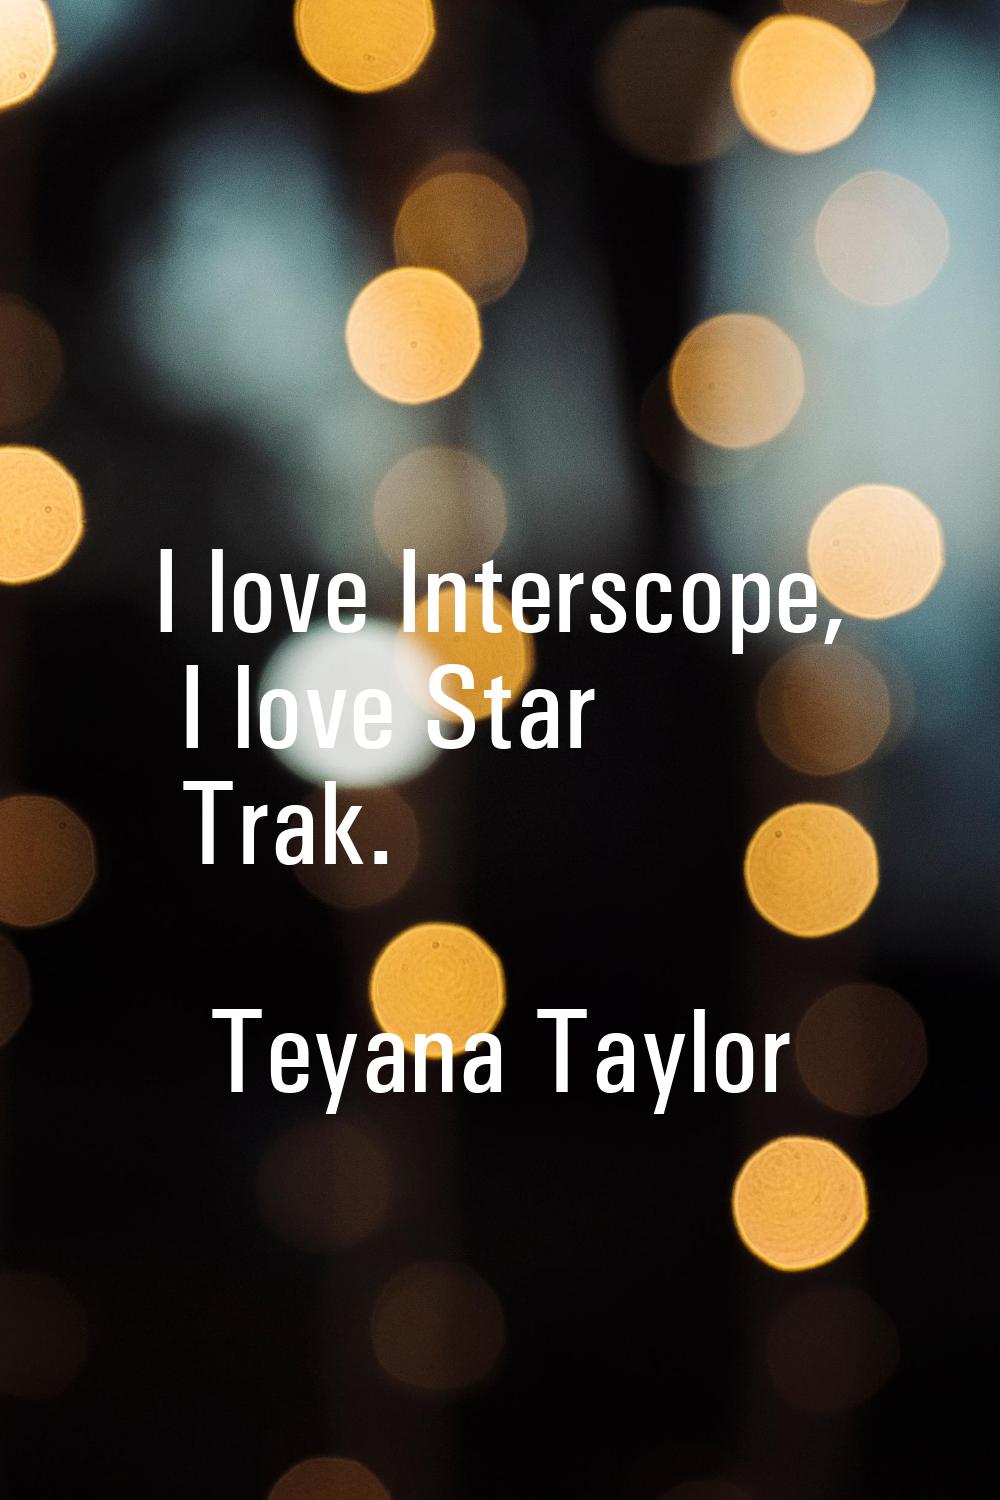 I love Interscope, I love Star Trak.